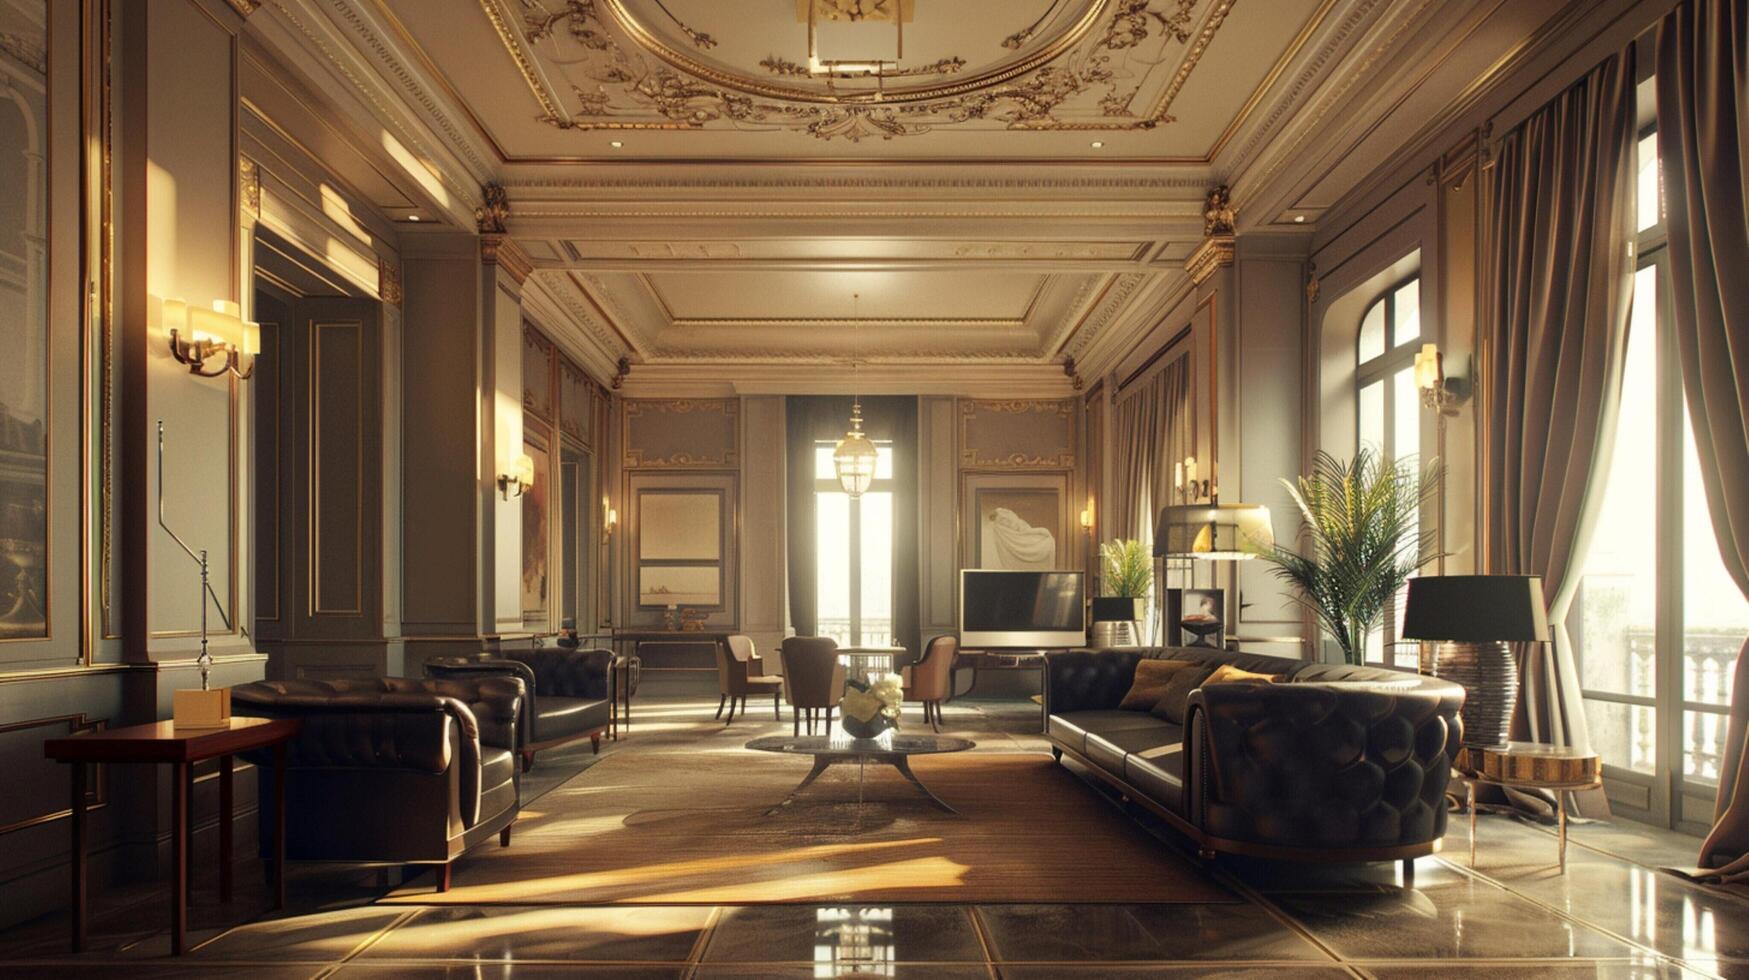 art deco luxury and stylish apartment interior photo